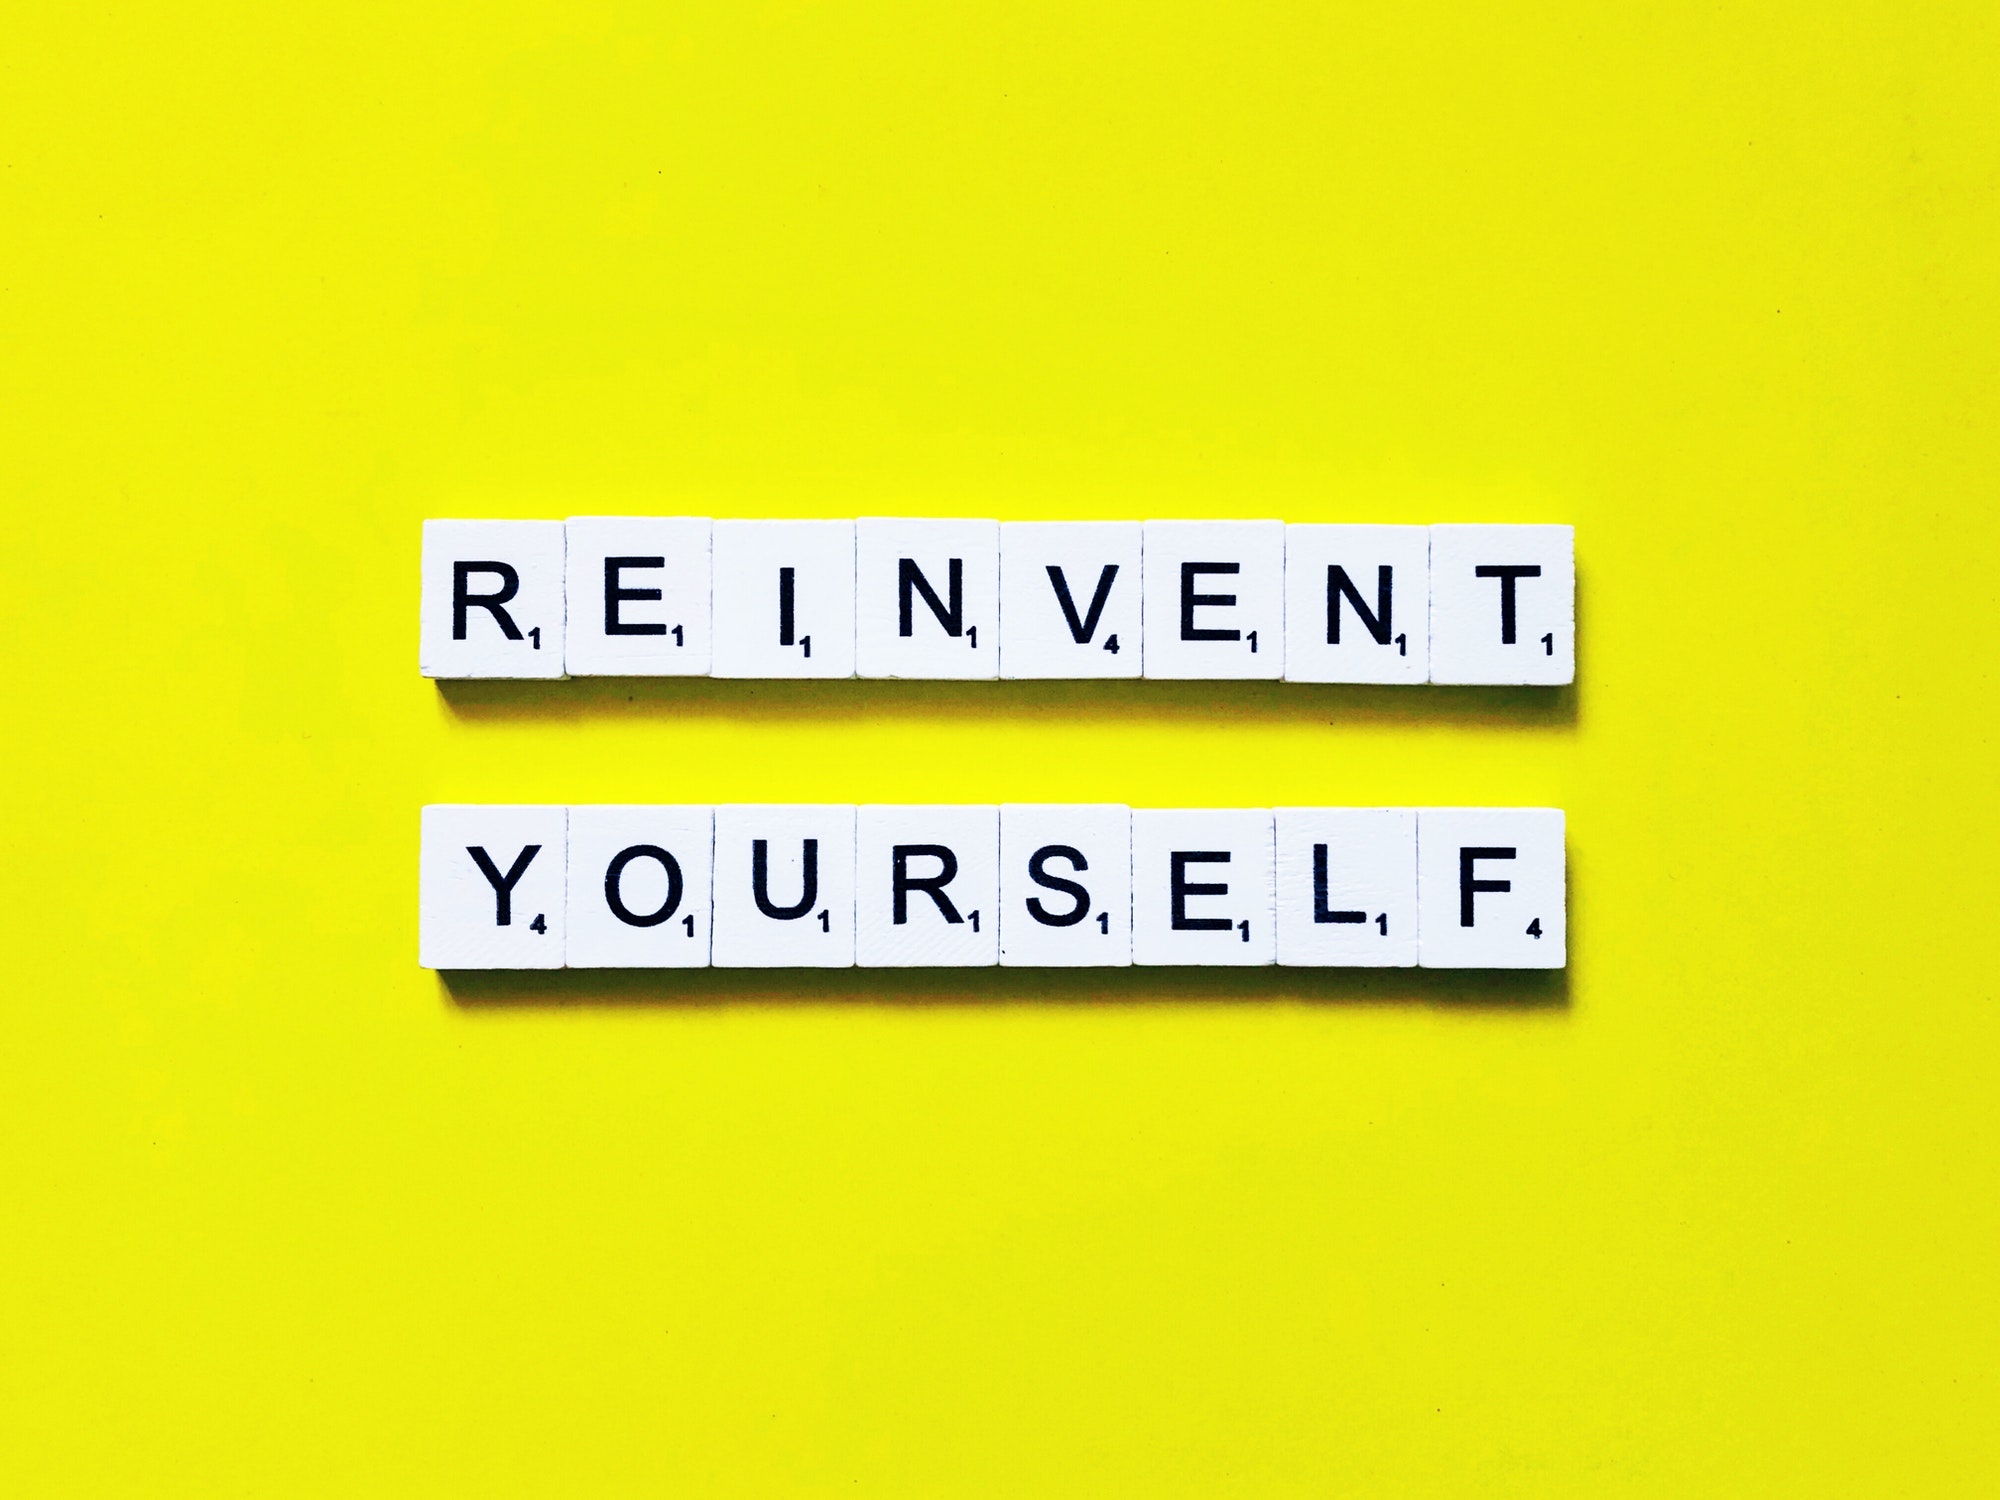 Reinvent yourself.